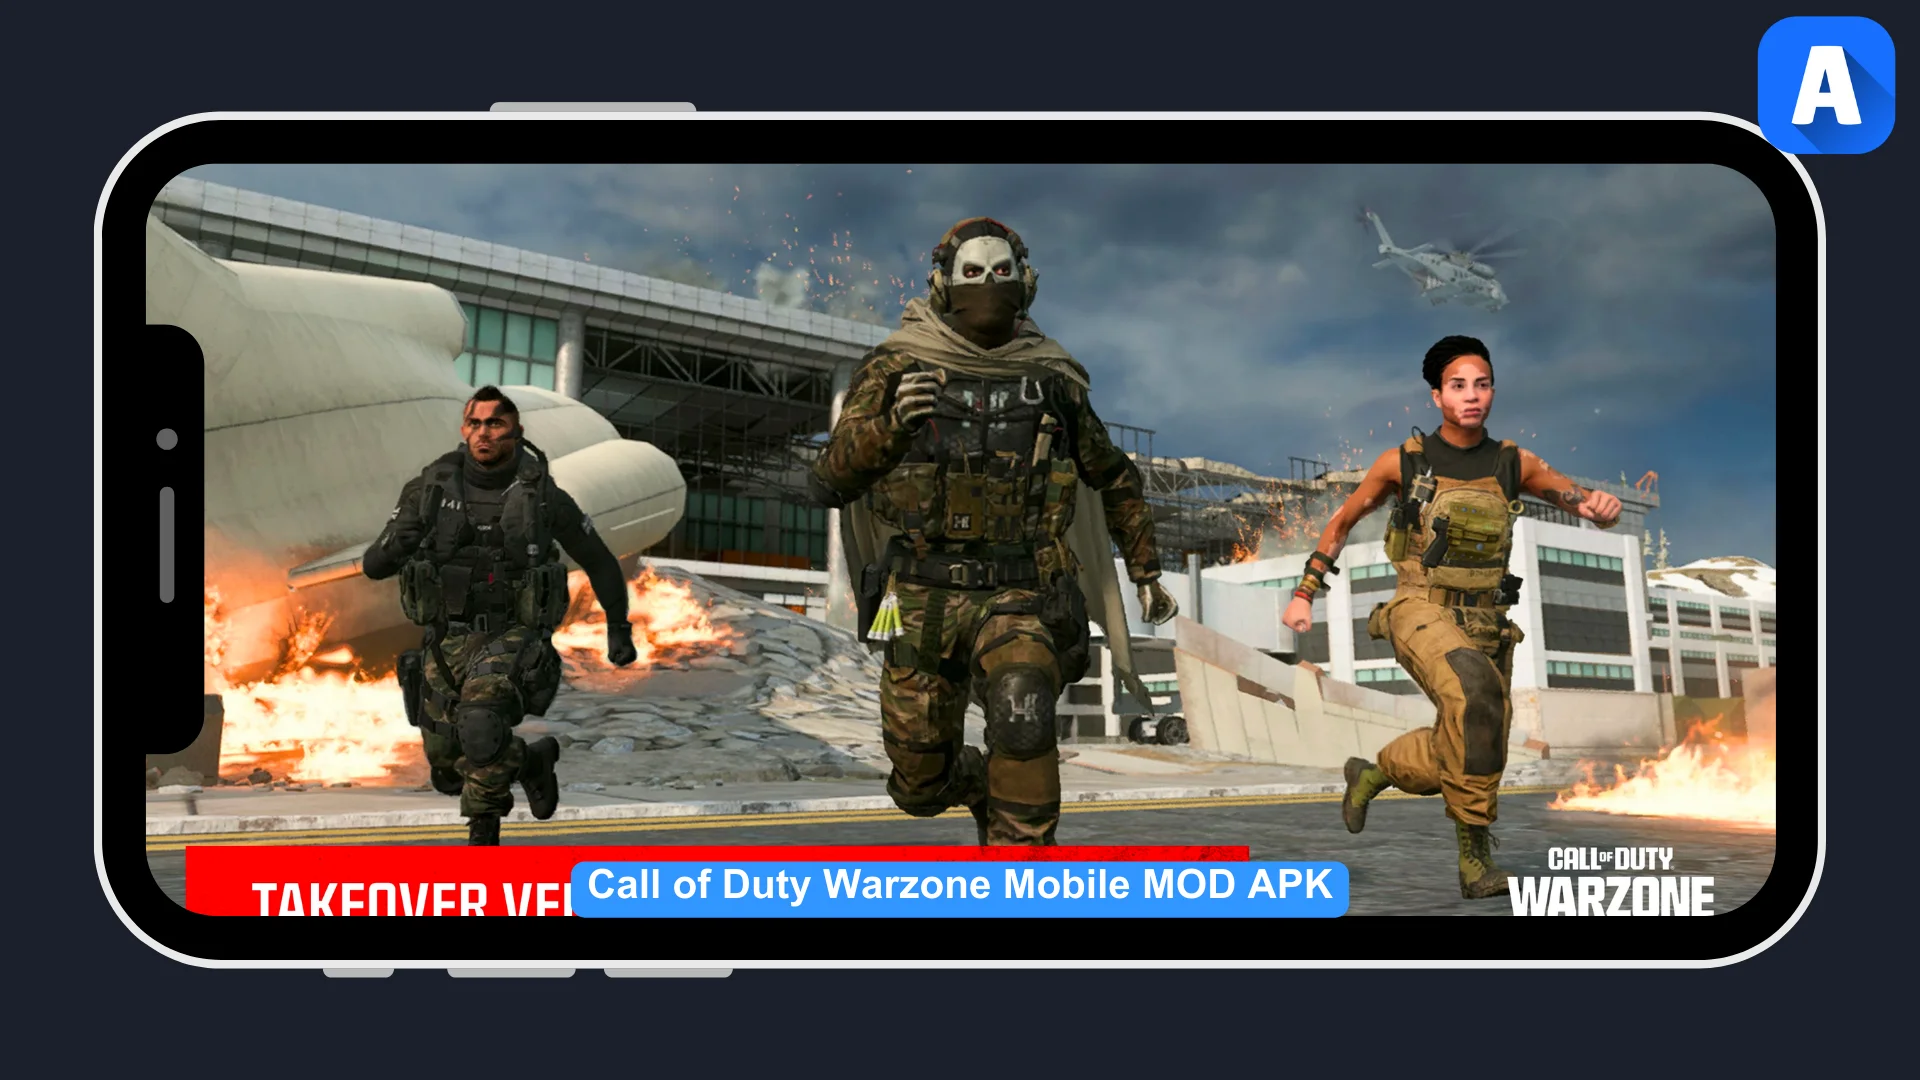 Call of Duty Warzone Mobile MOD APK Screenshot 2